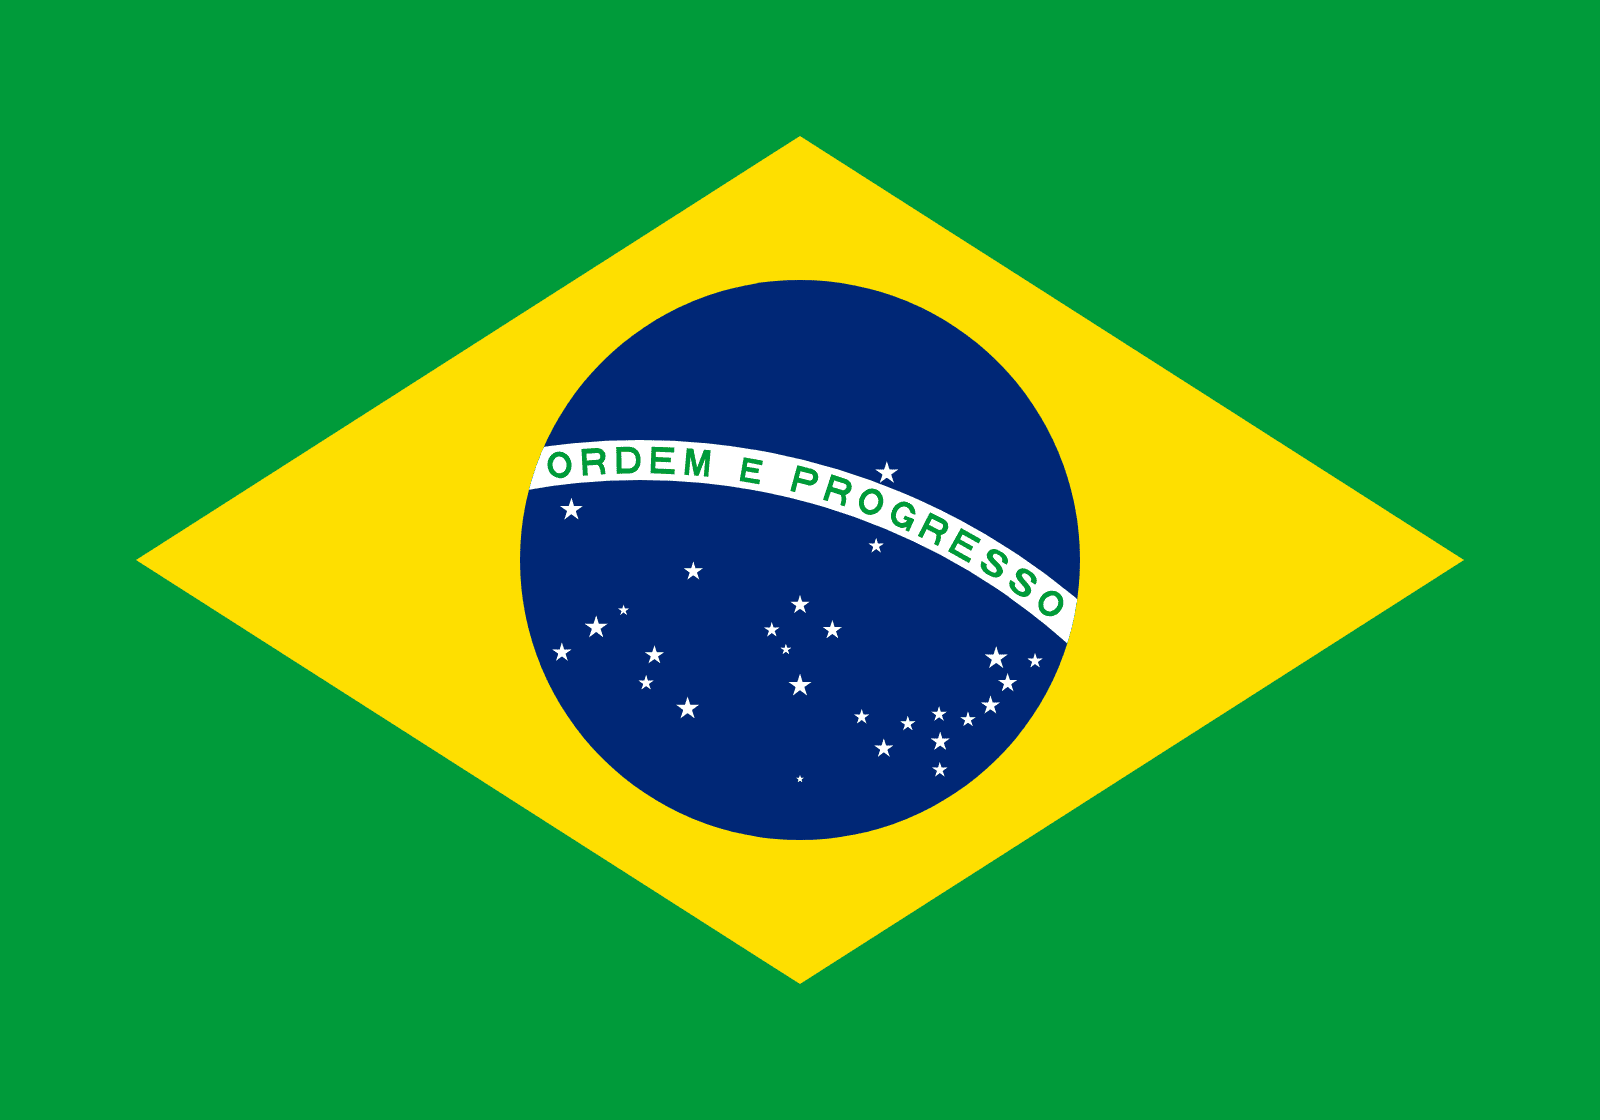 Image result for brazil flag